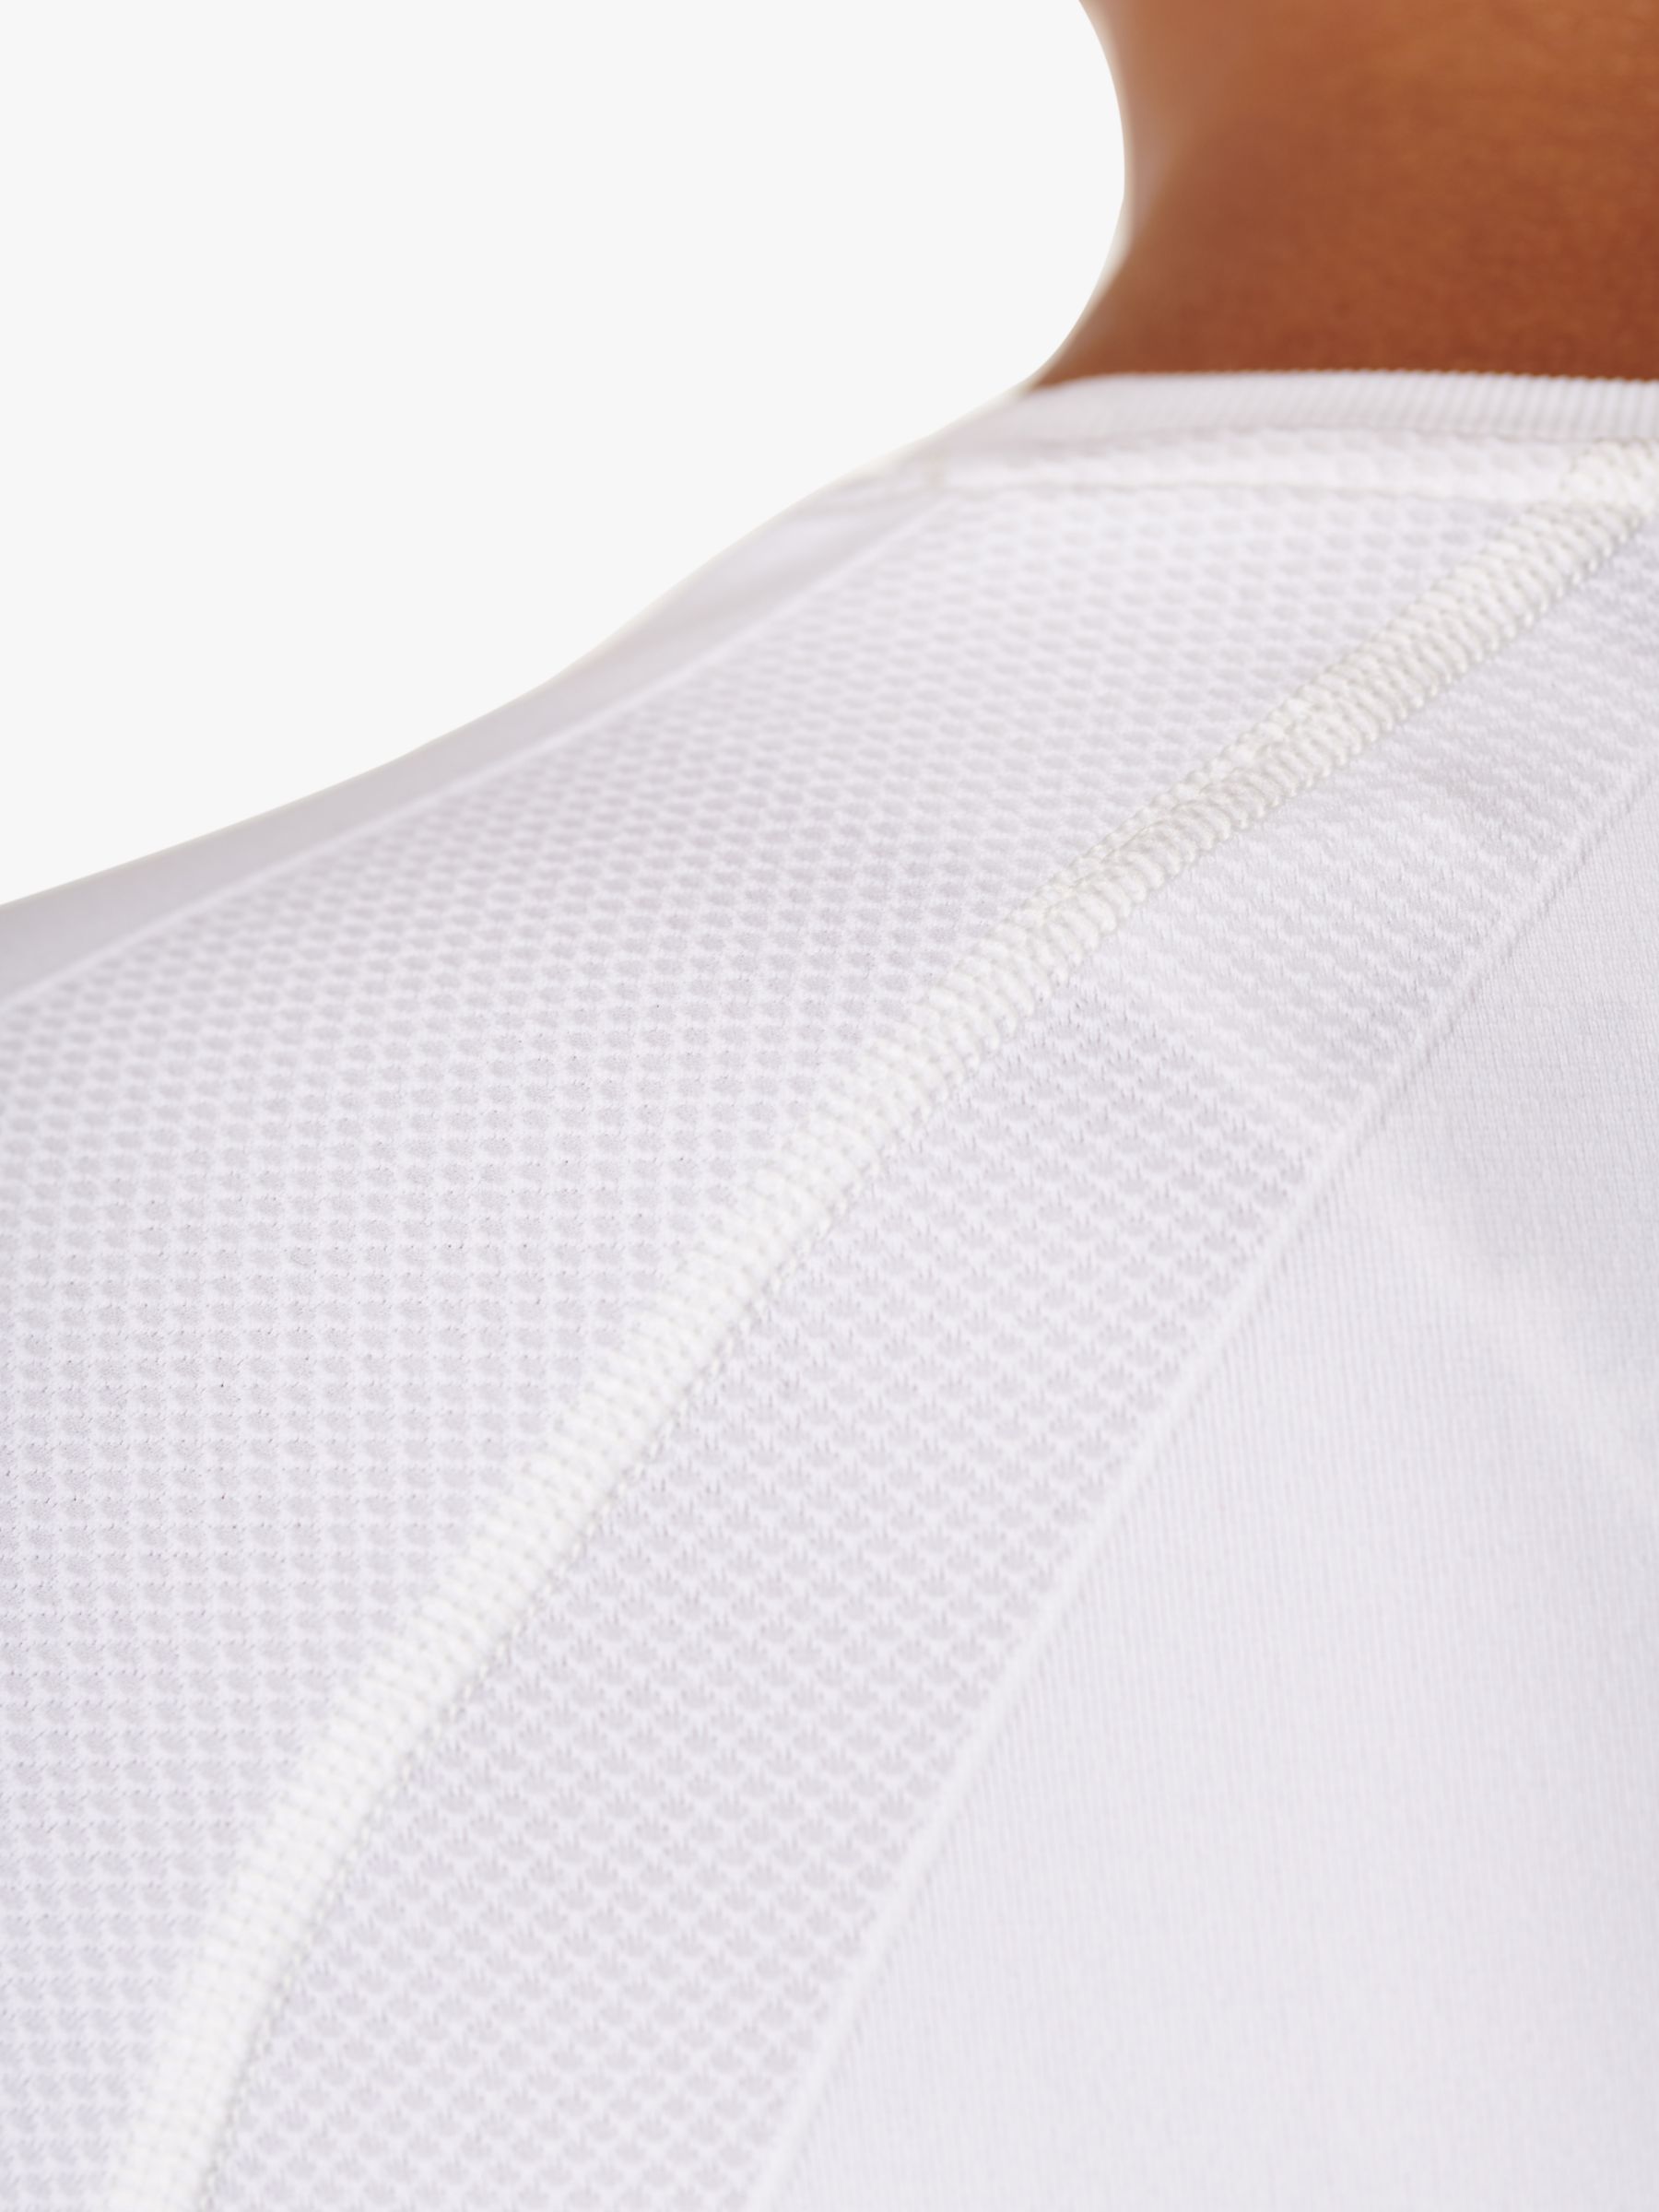 Sweaty Betty Athlete Seamless Long Sleeve Top, White at John Lewis